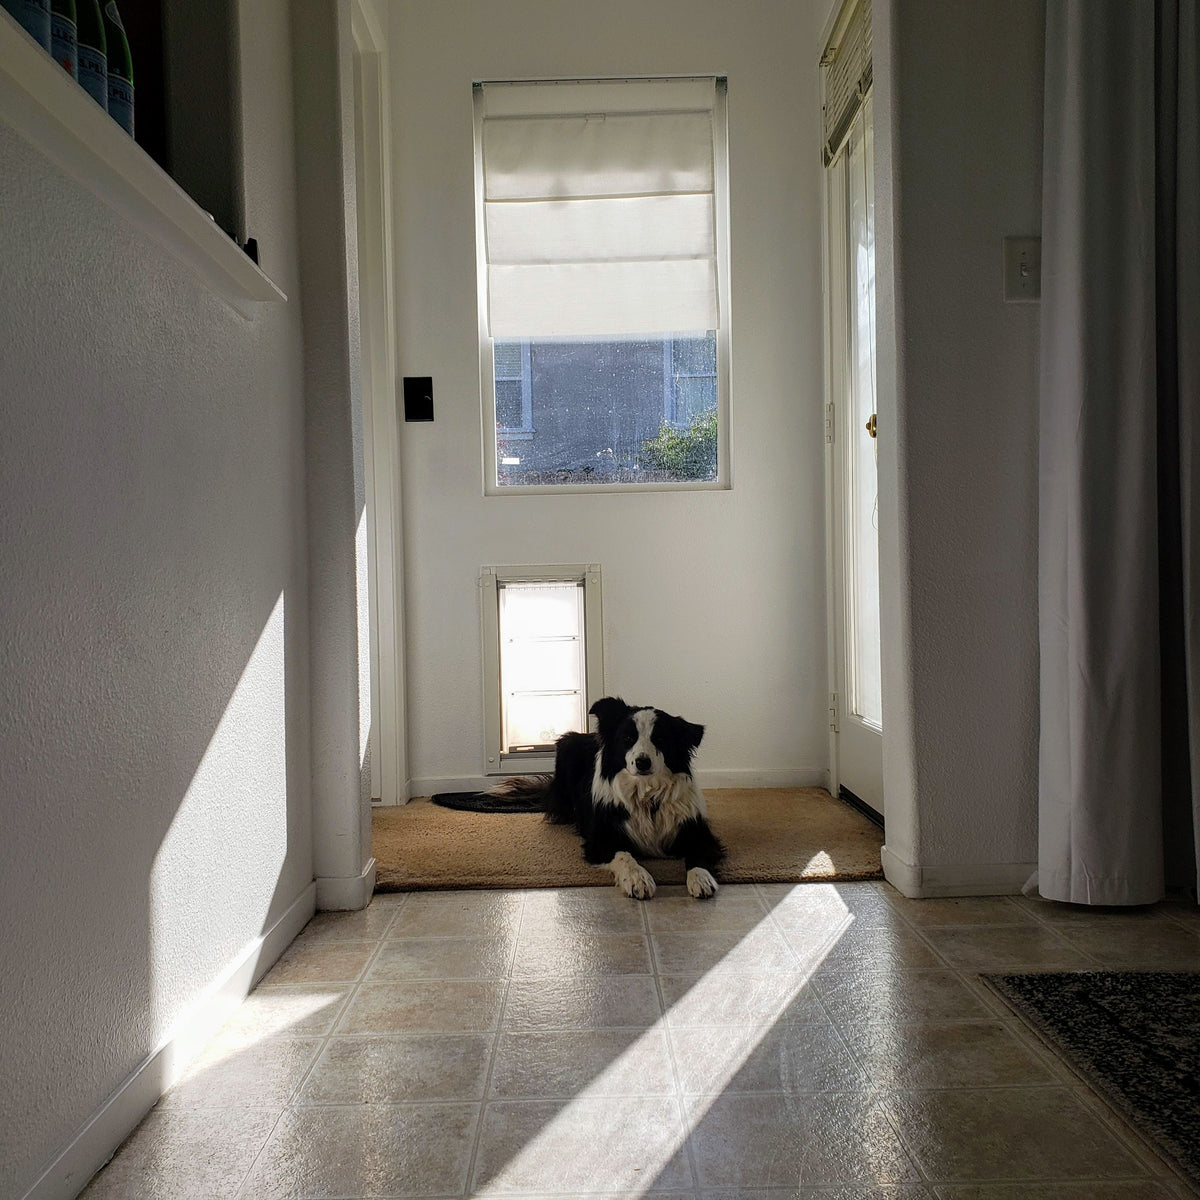 Endura Flap Pet Door For Walls Guided Installation Tutorial Youtube